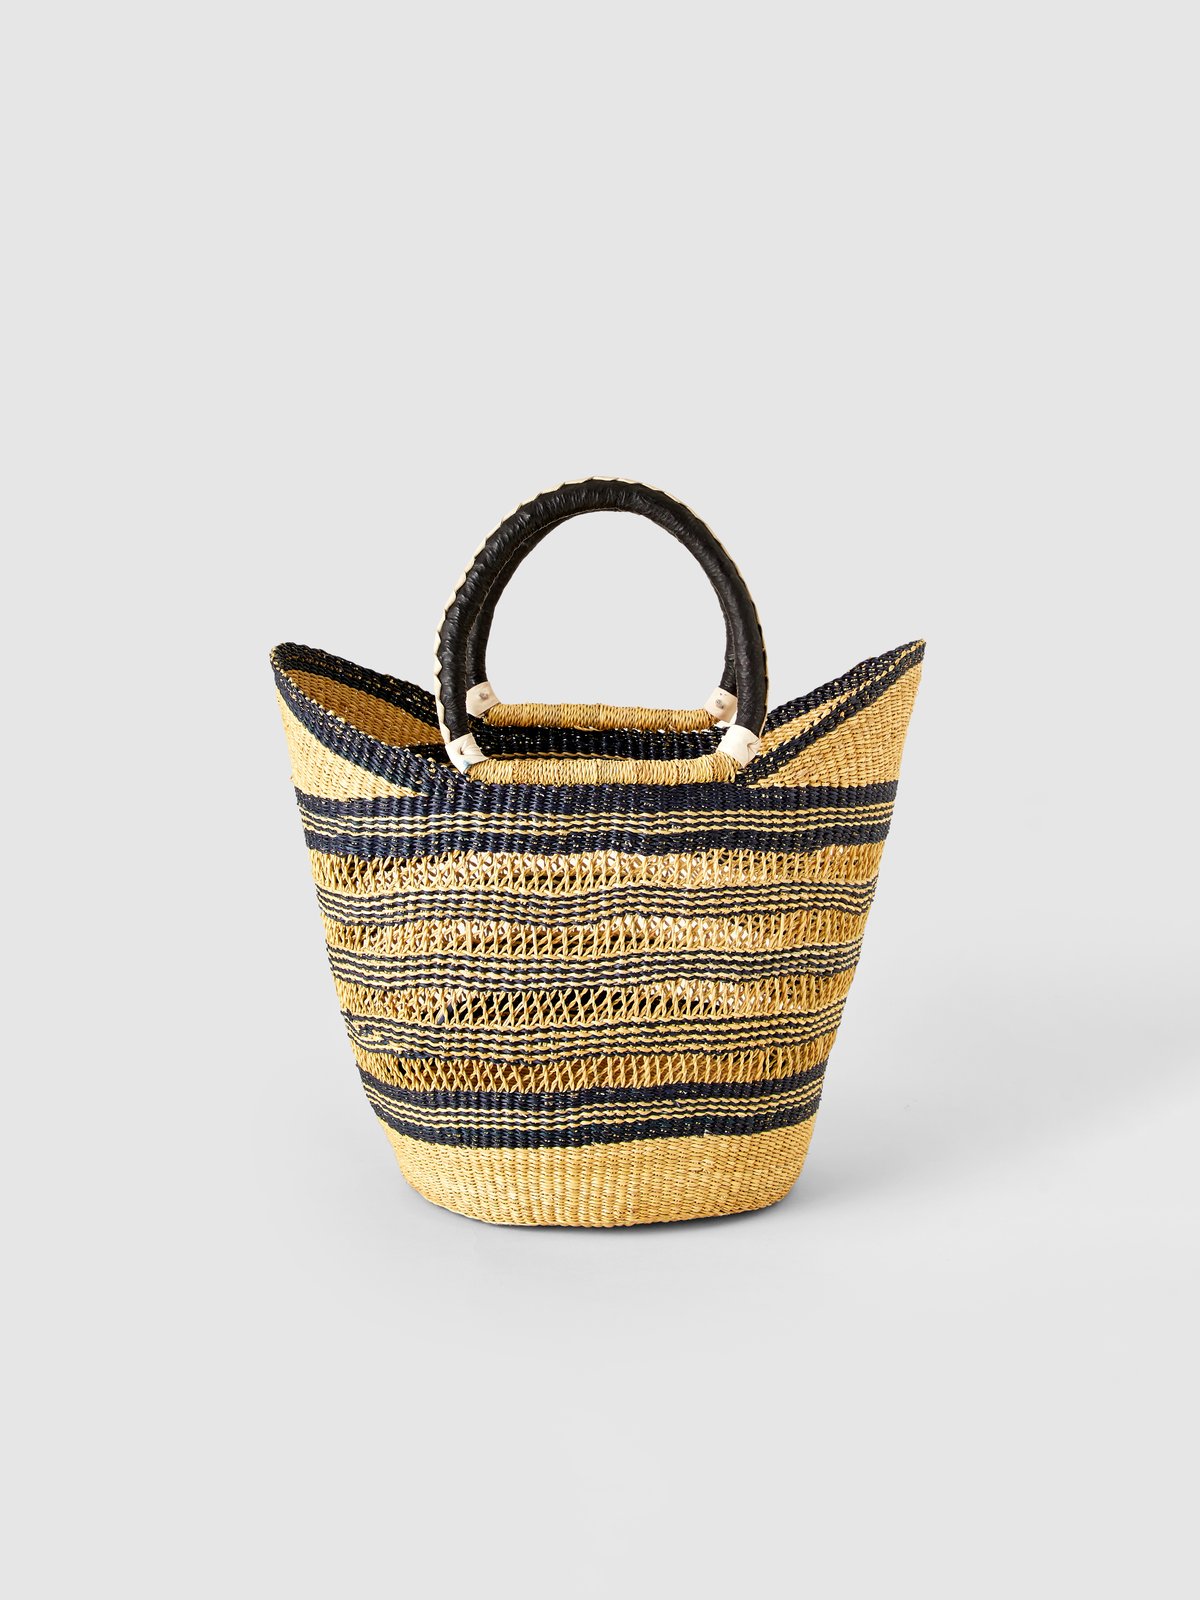 Savanna Baskets Bernice Straw Basket | Verishop